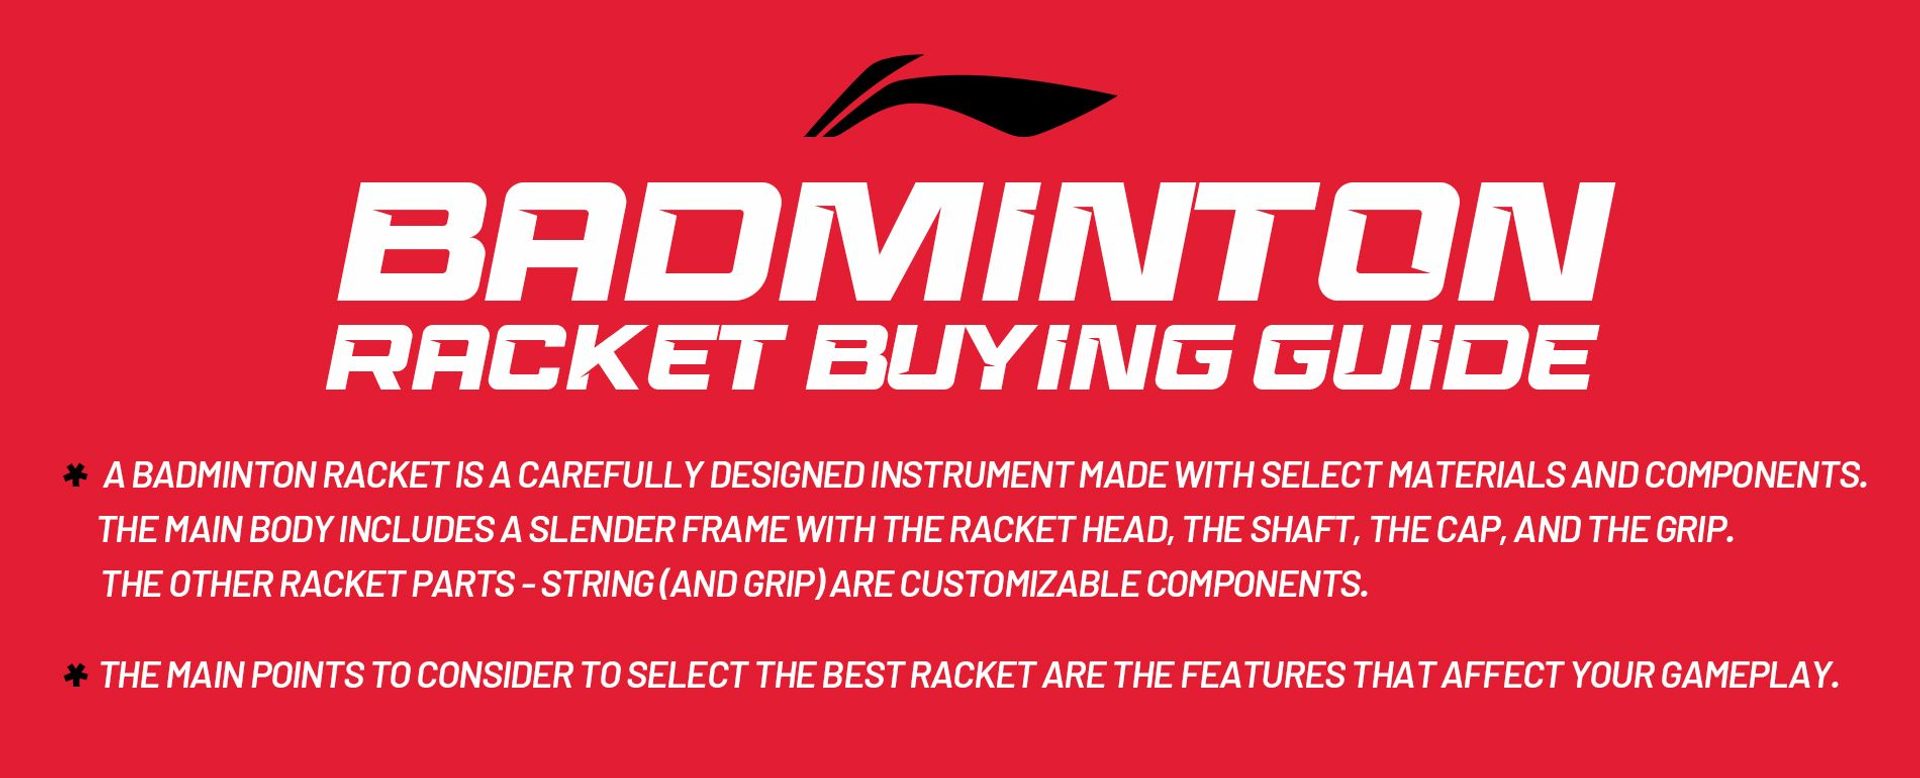 Badminton racket buying guide